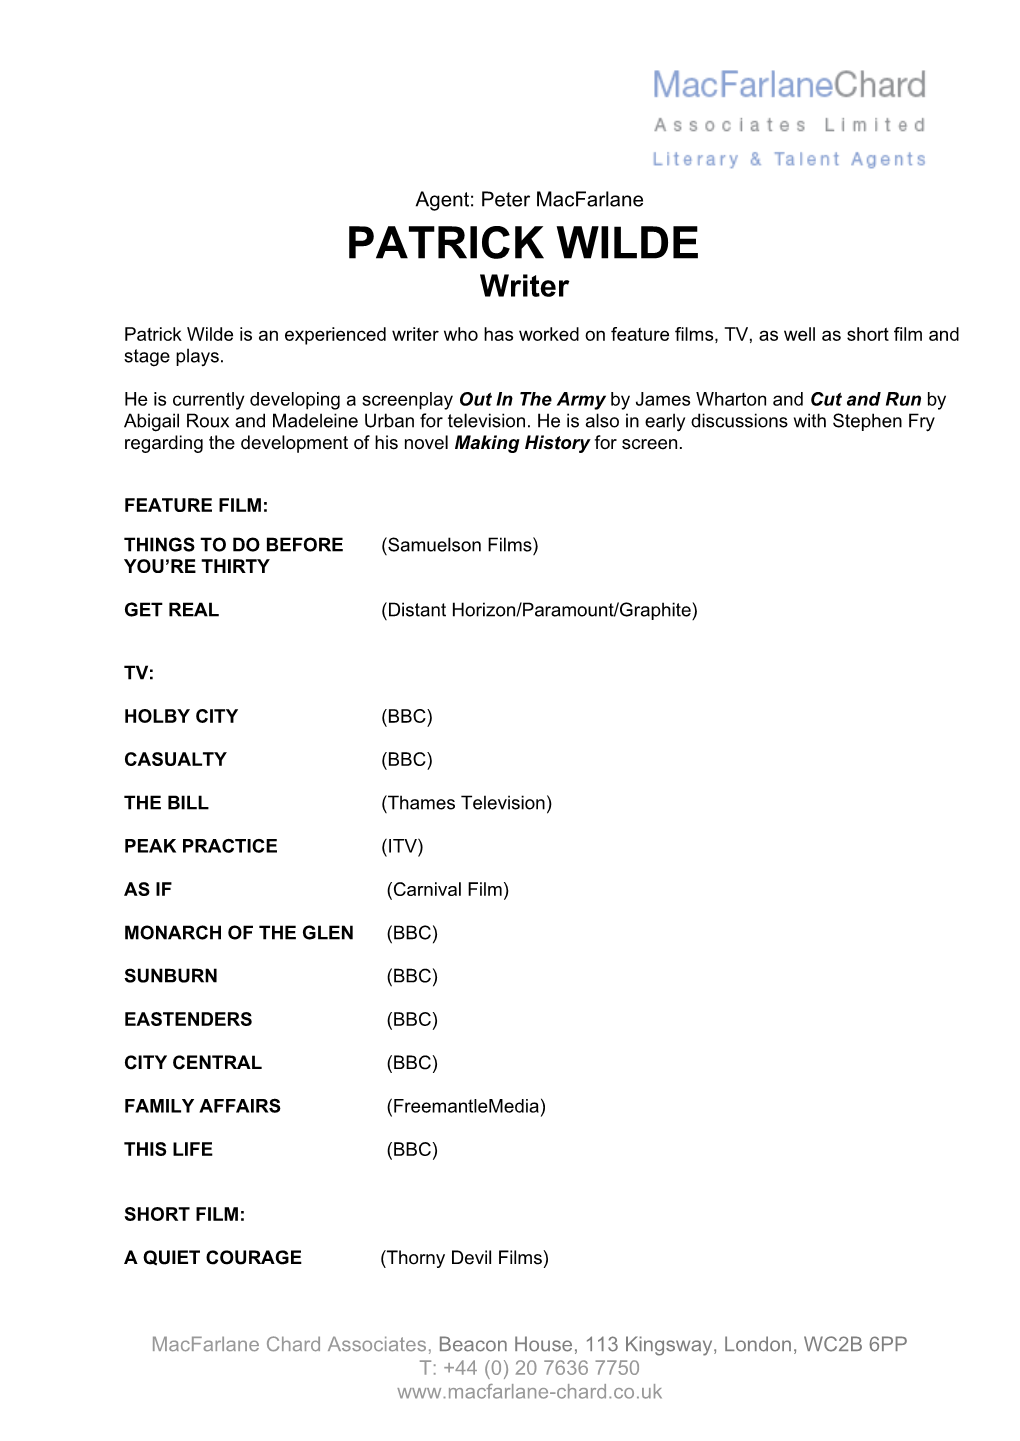 PATRICK WILDE Writer